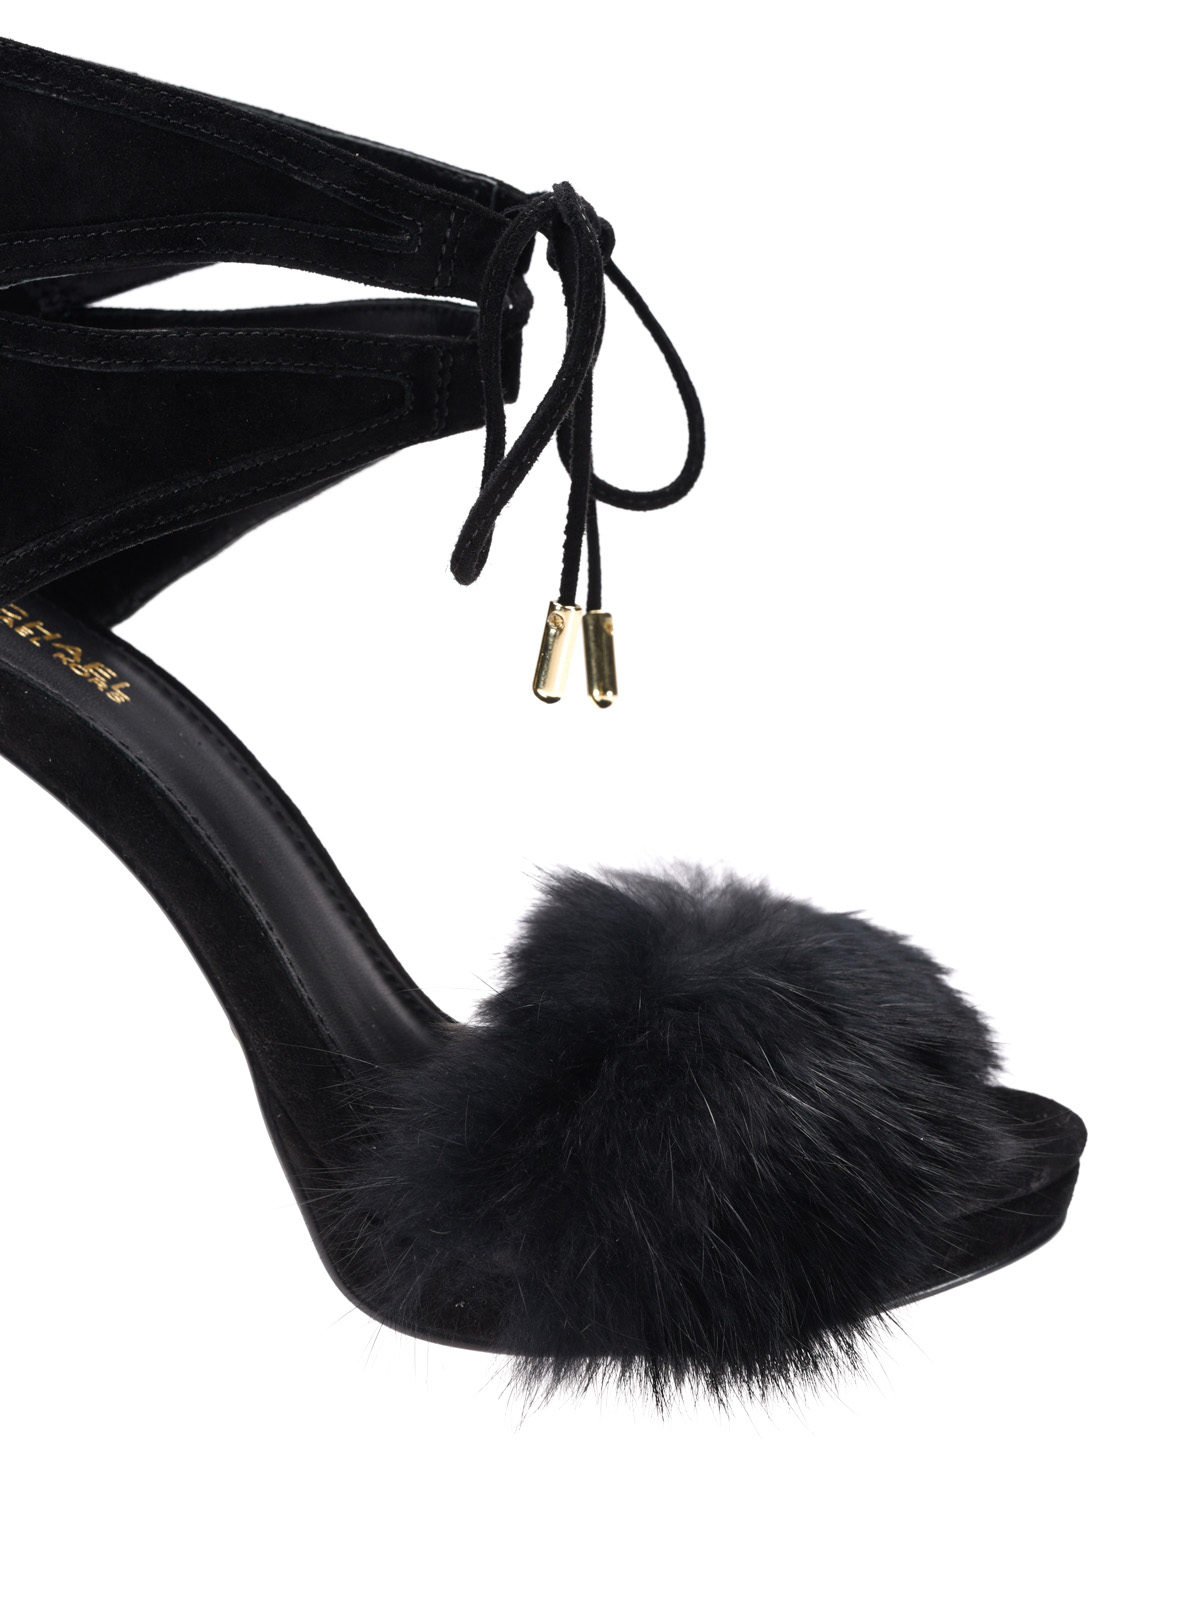 Sandals Michael Kors - Remi lapin fur detail sandals - 40F7REHA1S001